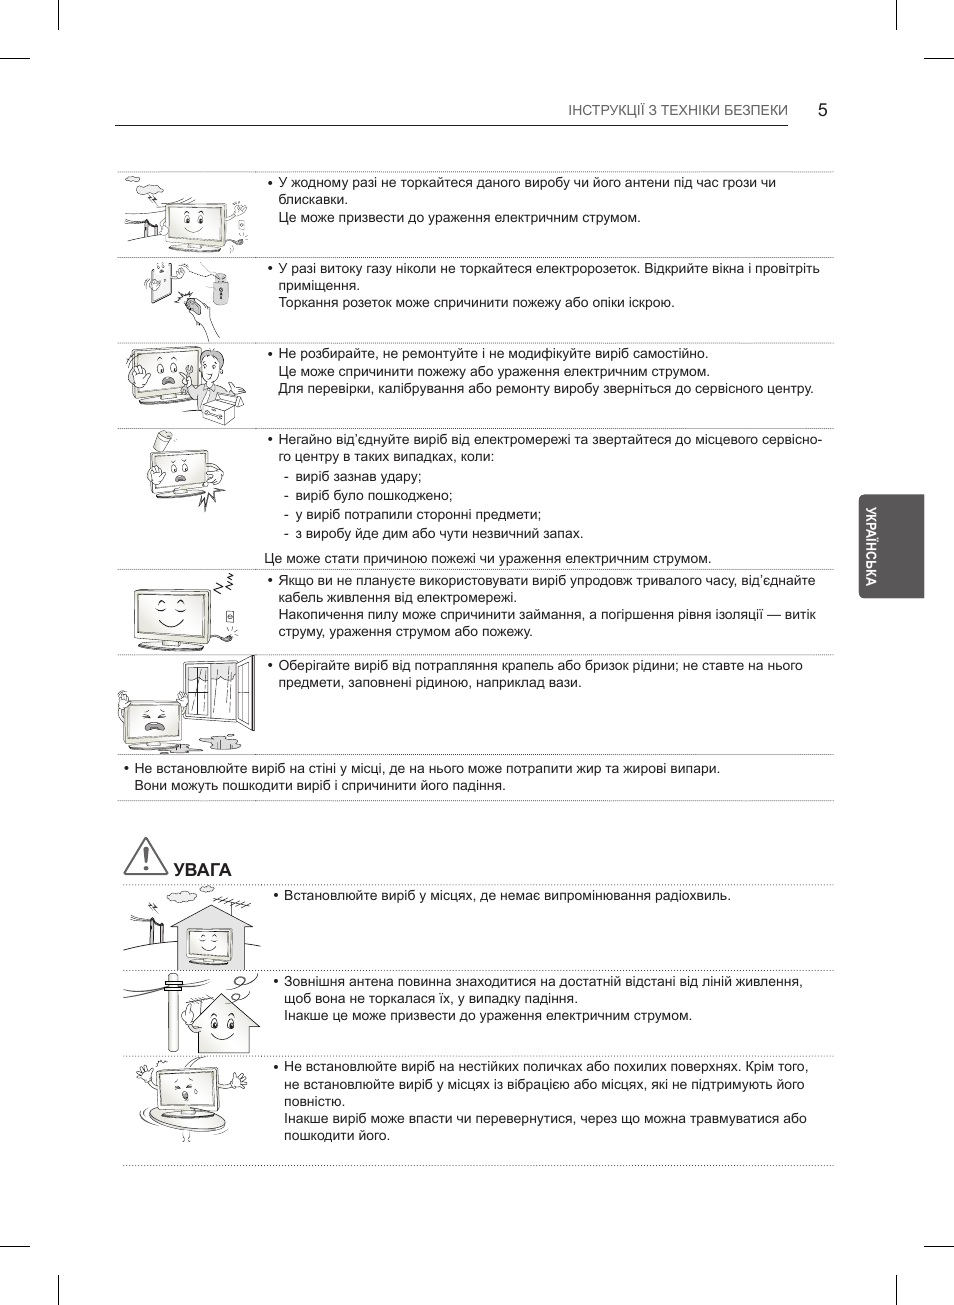 Увага | Инструкция по эксплуатации LG 32LB561U | Страница 103 / 270